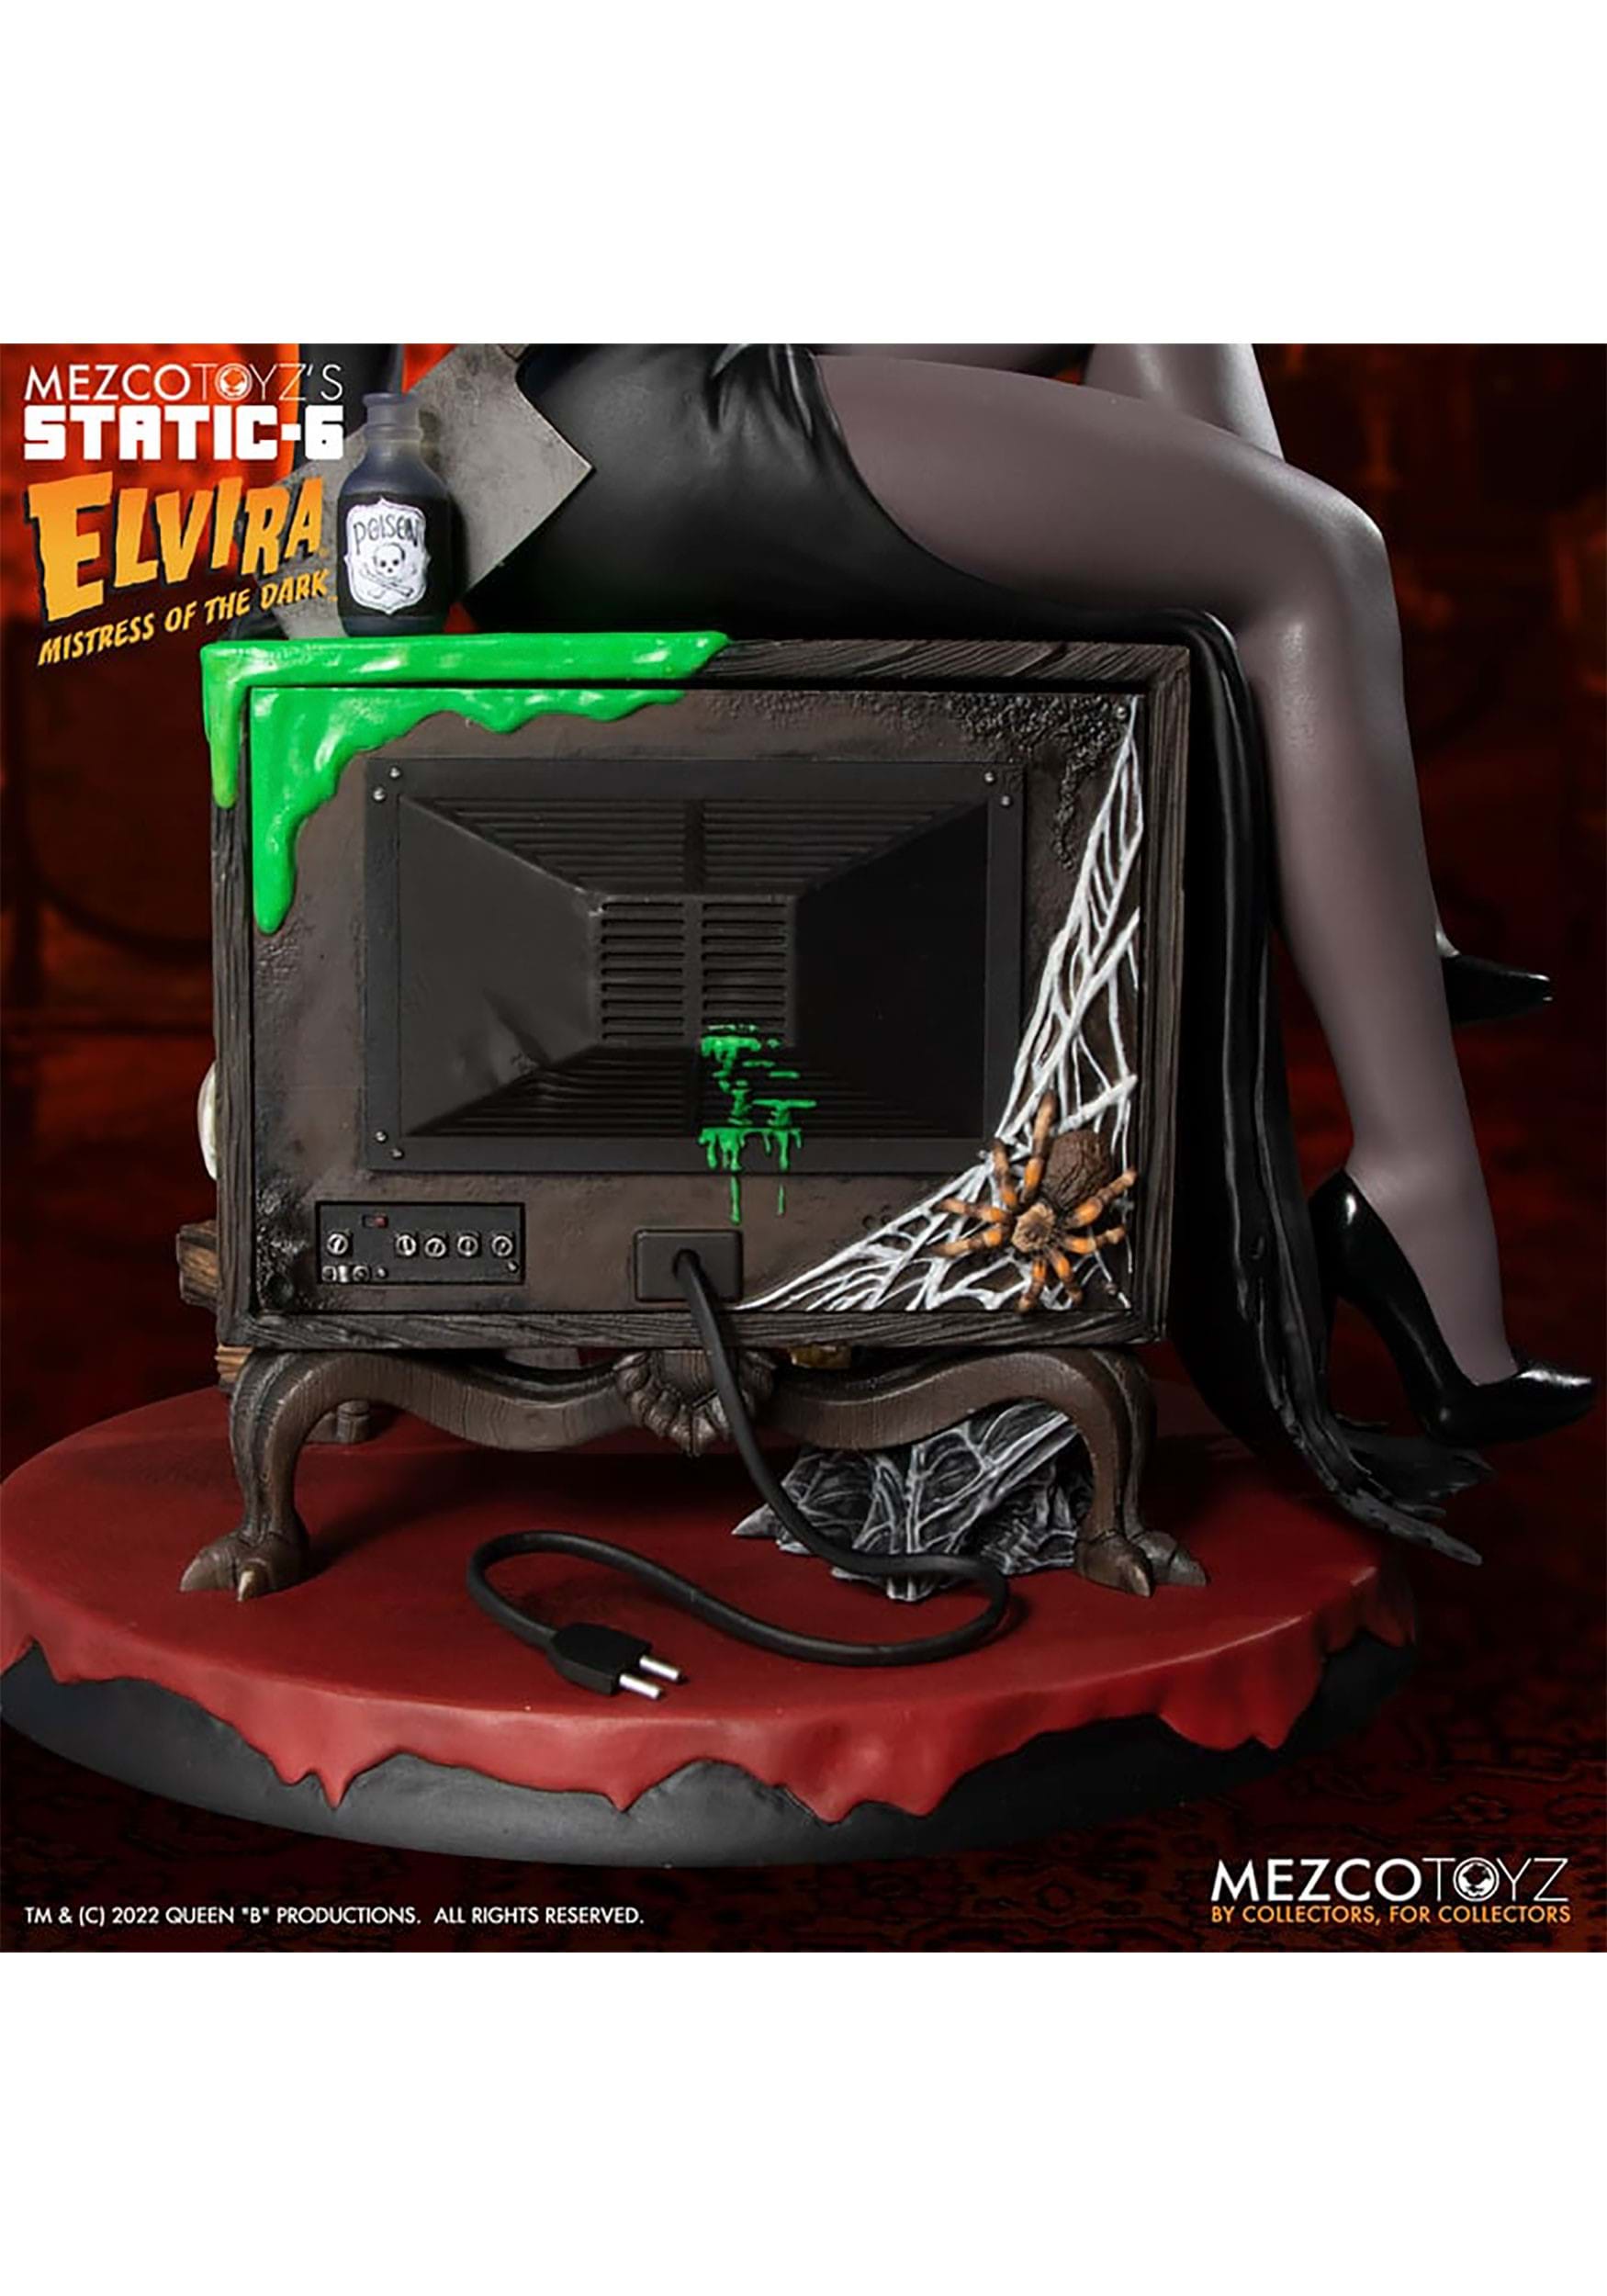 Elvira: Mistress Of The Dark Static-6 Elvira Scale Statue